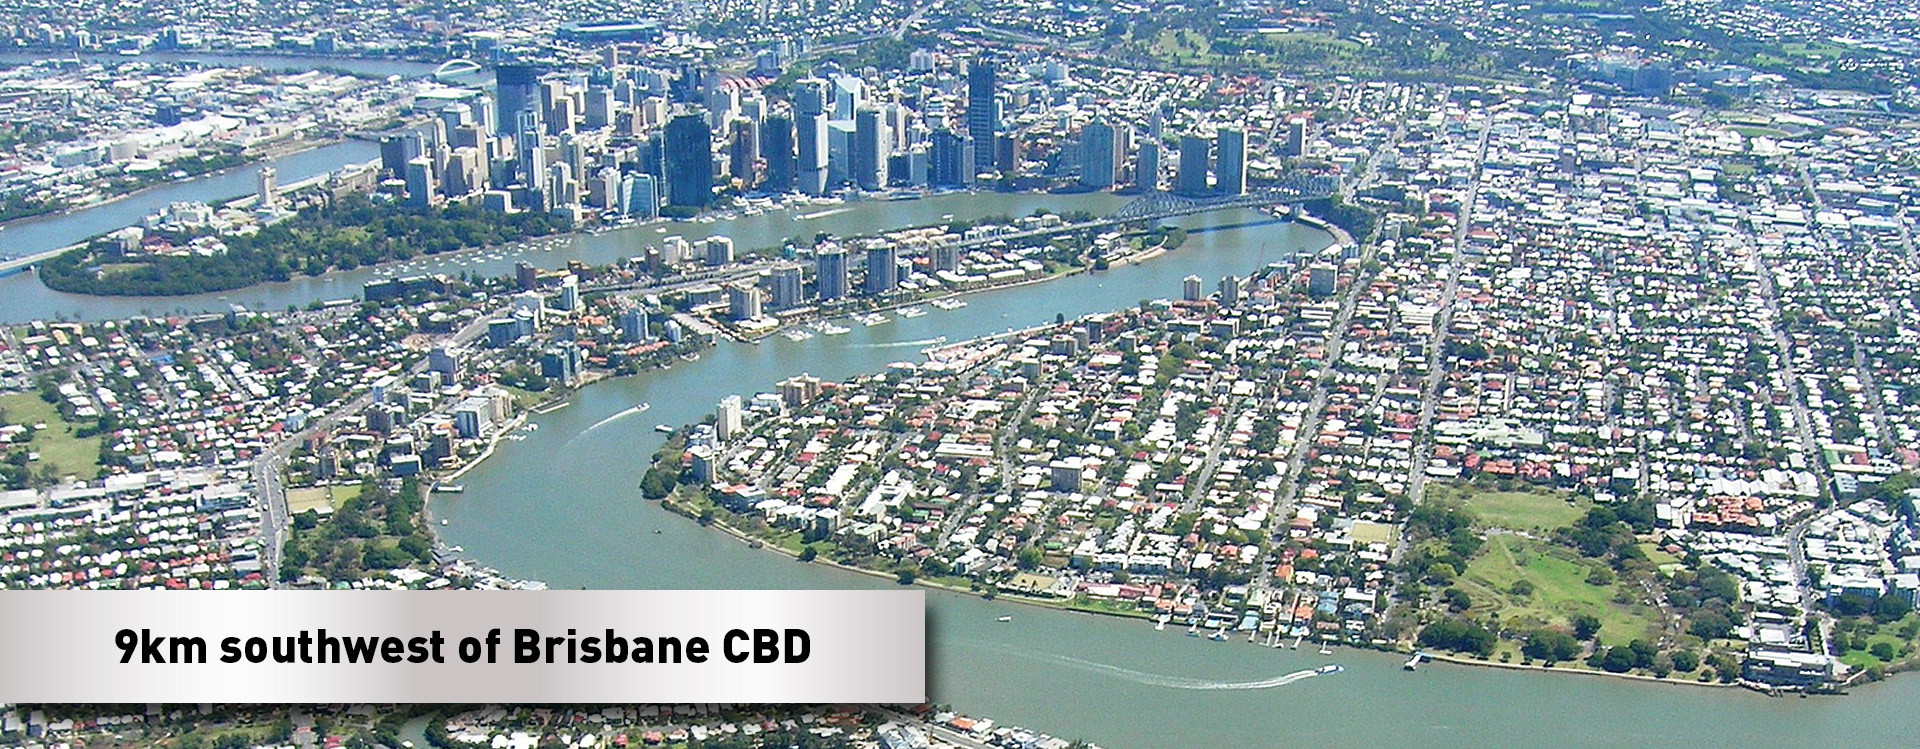 Brisbane-Satellite-map150415